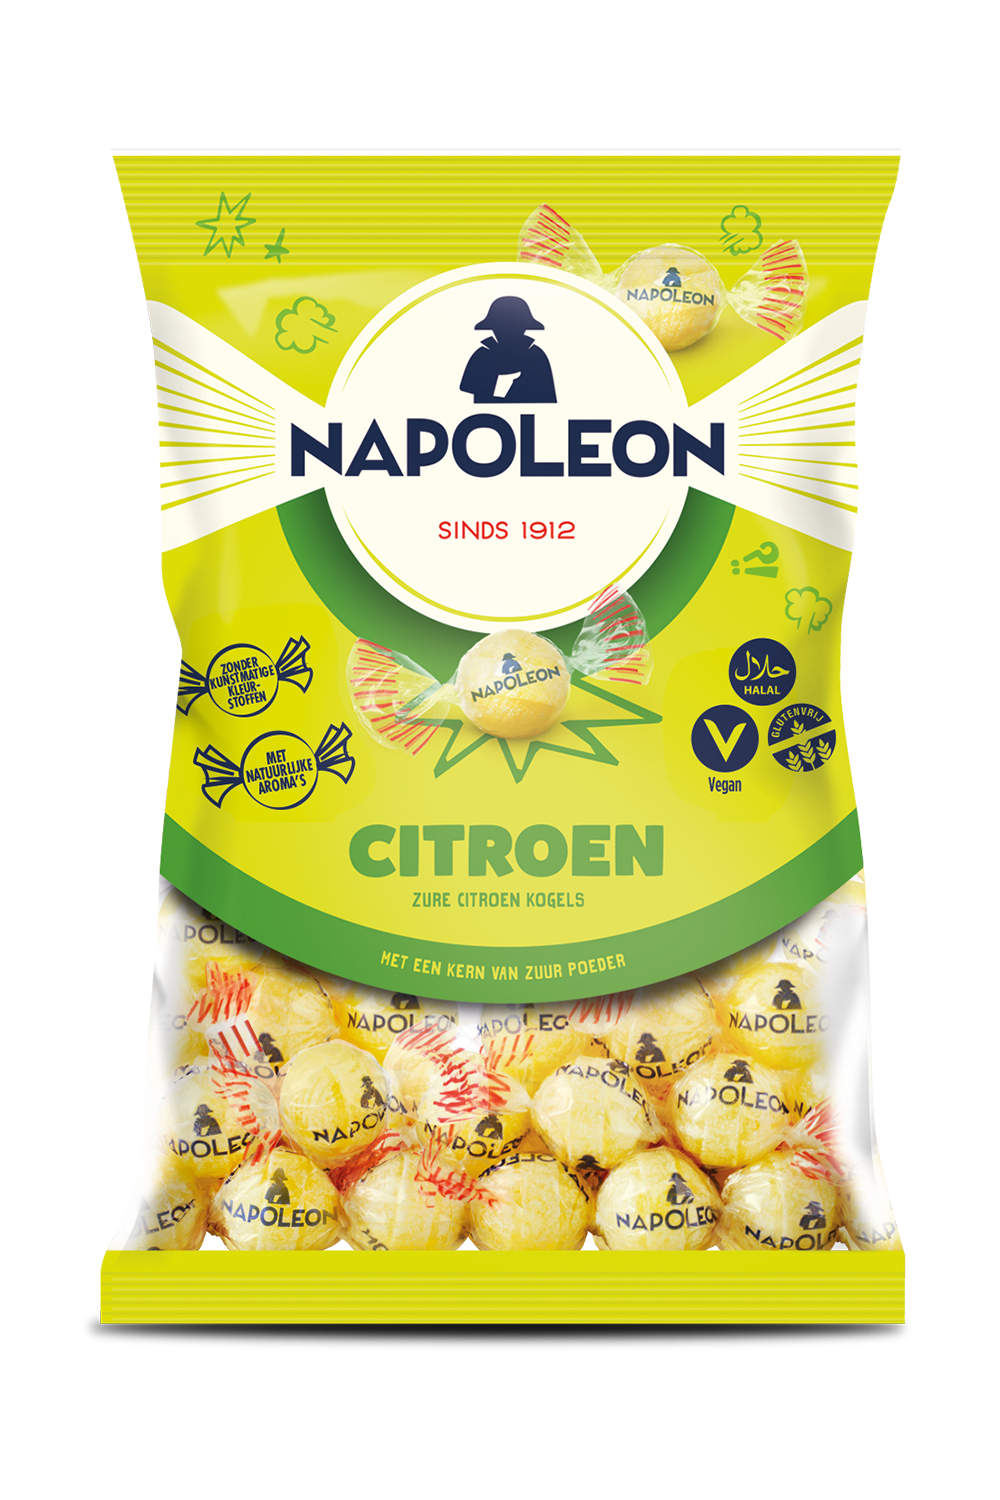 Napoleon zure citroen kogels.